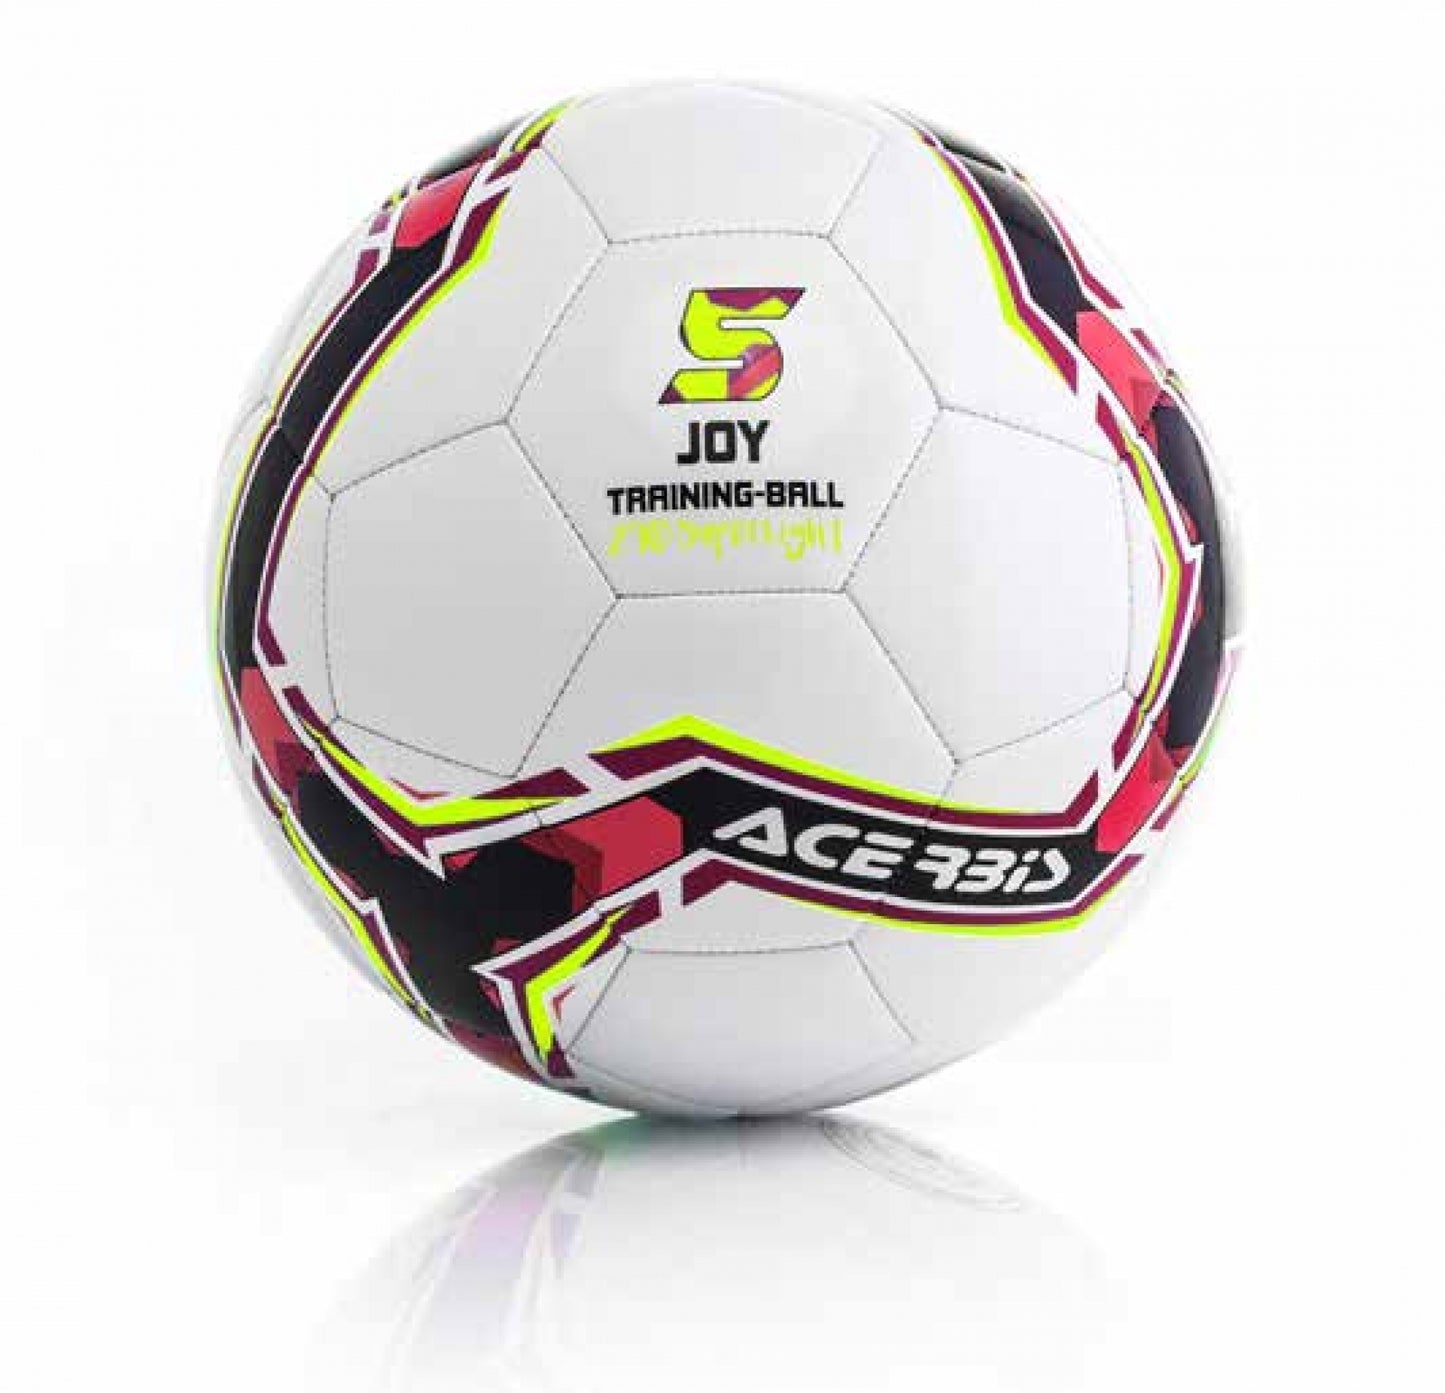 Joy Training Ball Super Light (290 Gram) Black/Red/Fluo Yellow 5 pack